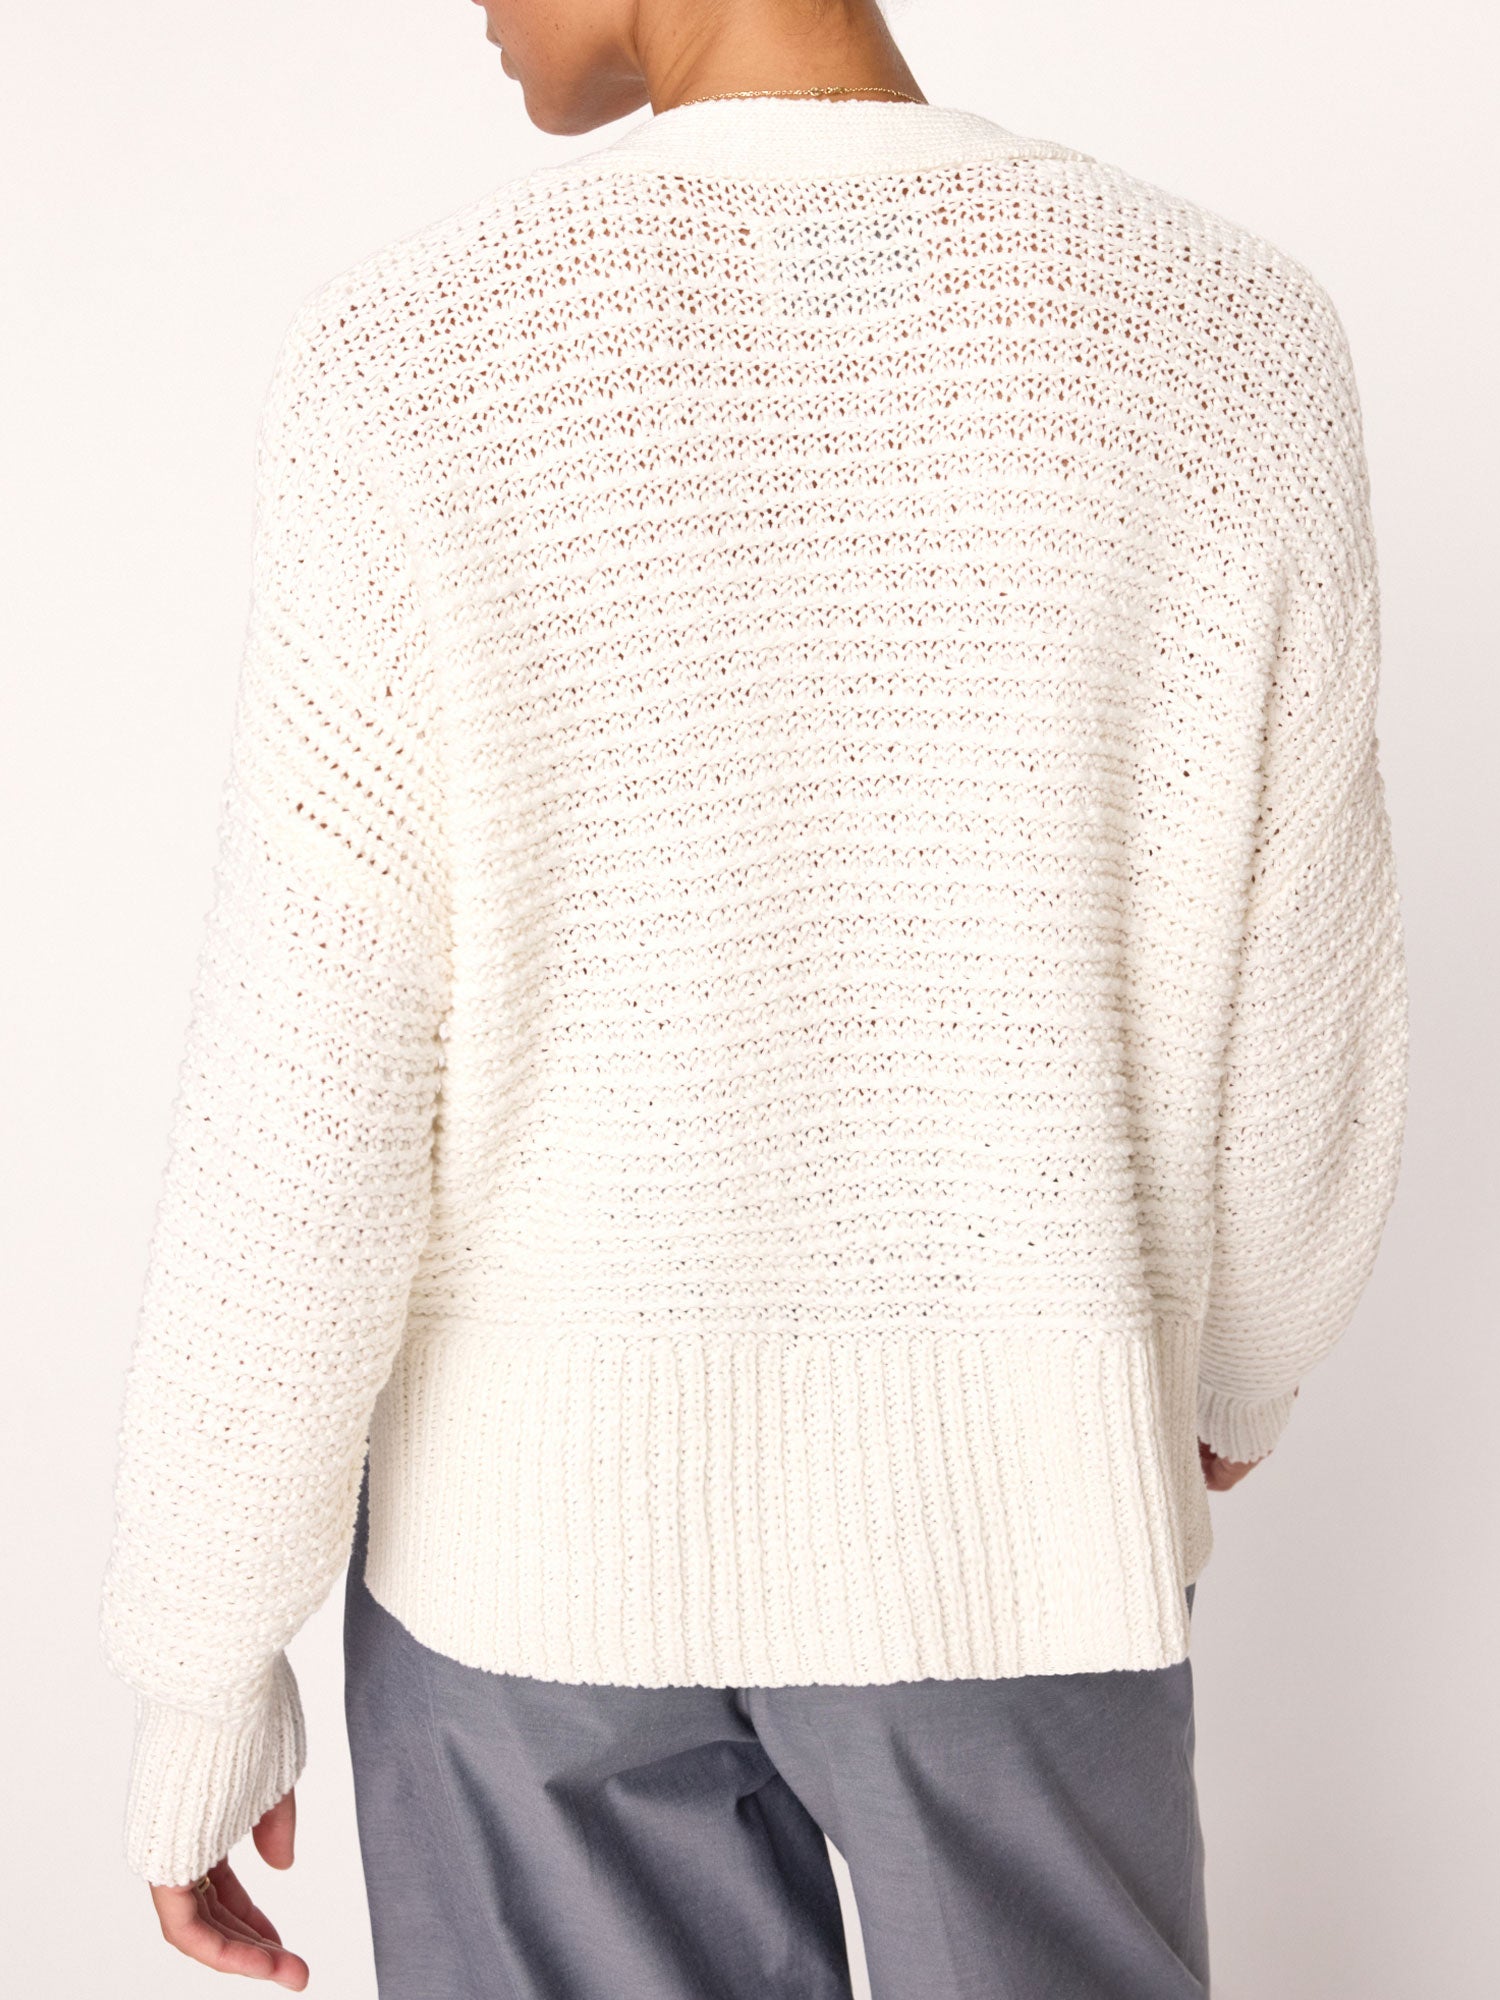 Sia cotton white cardigan sweater back view